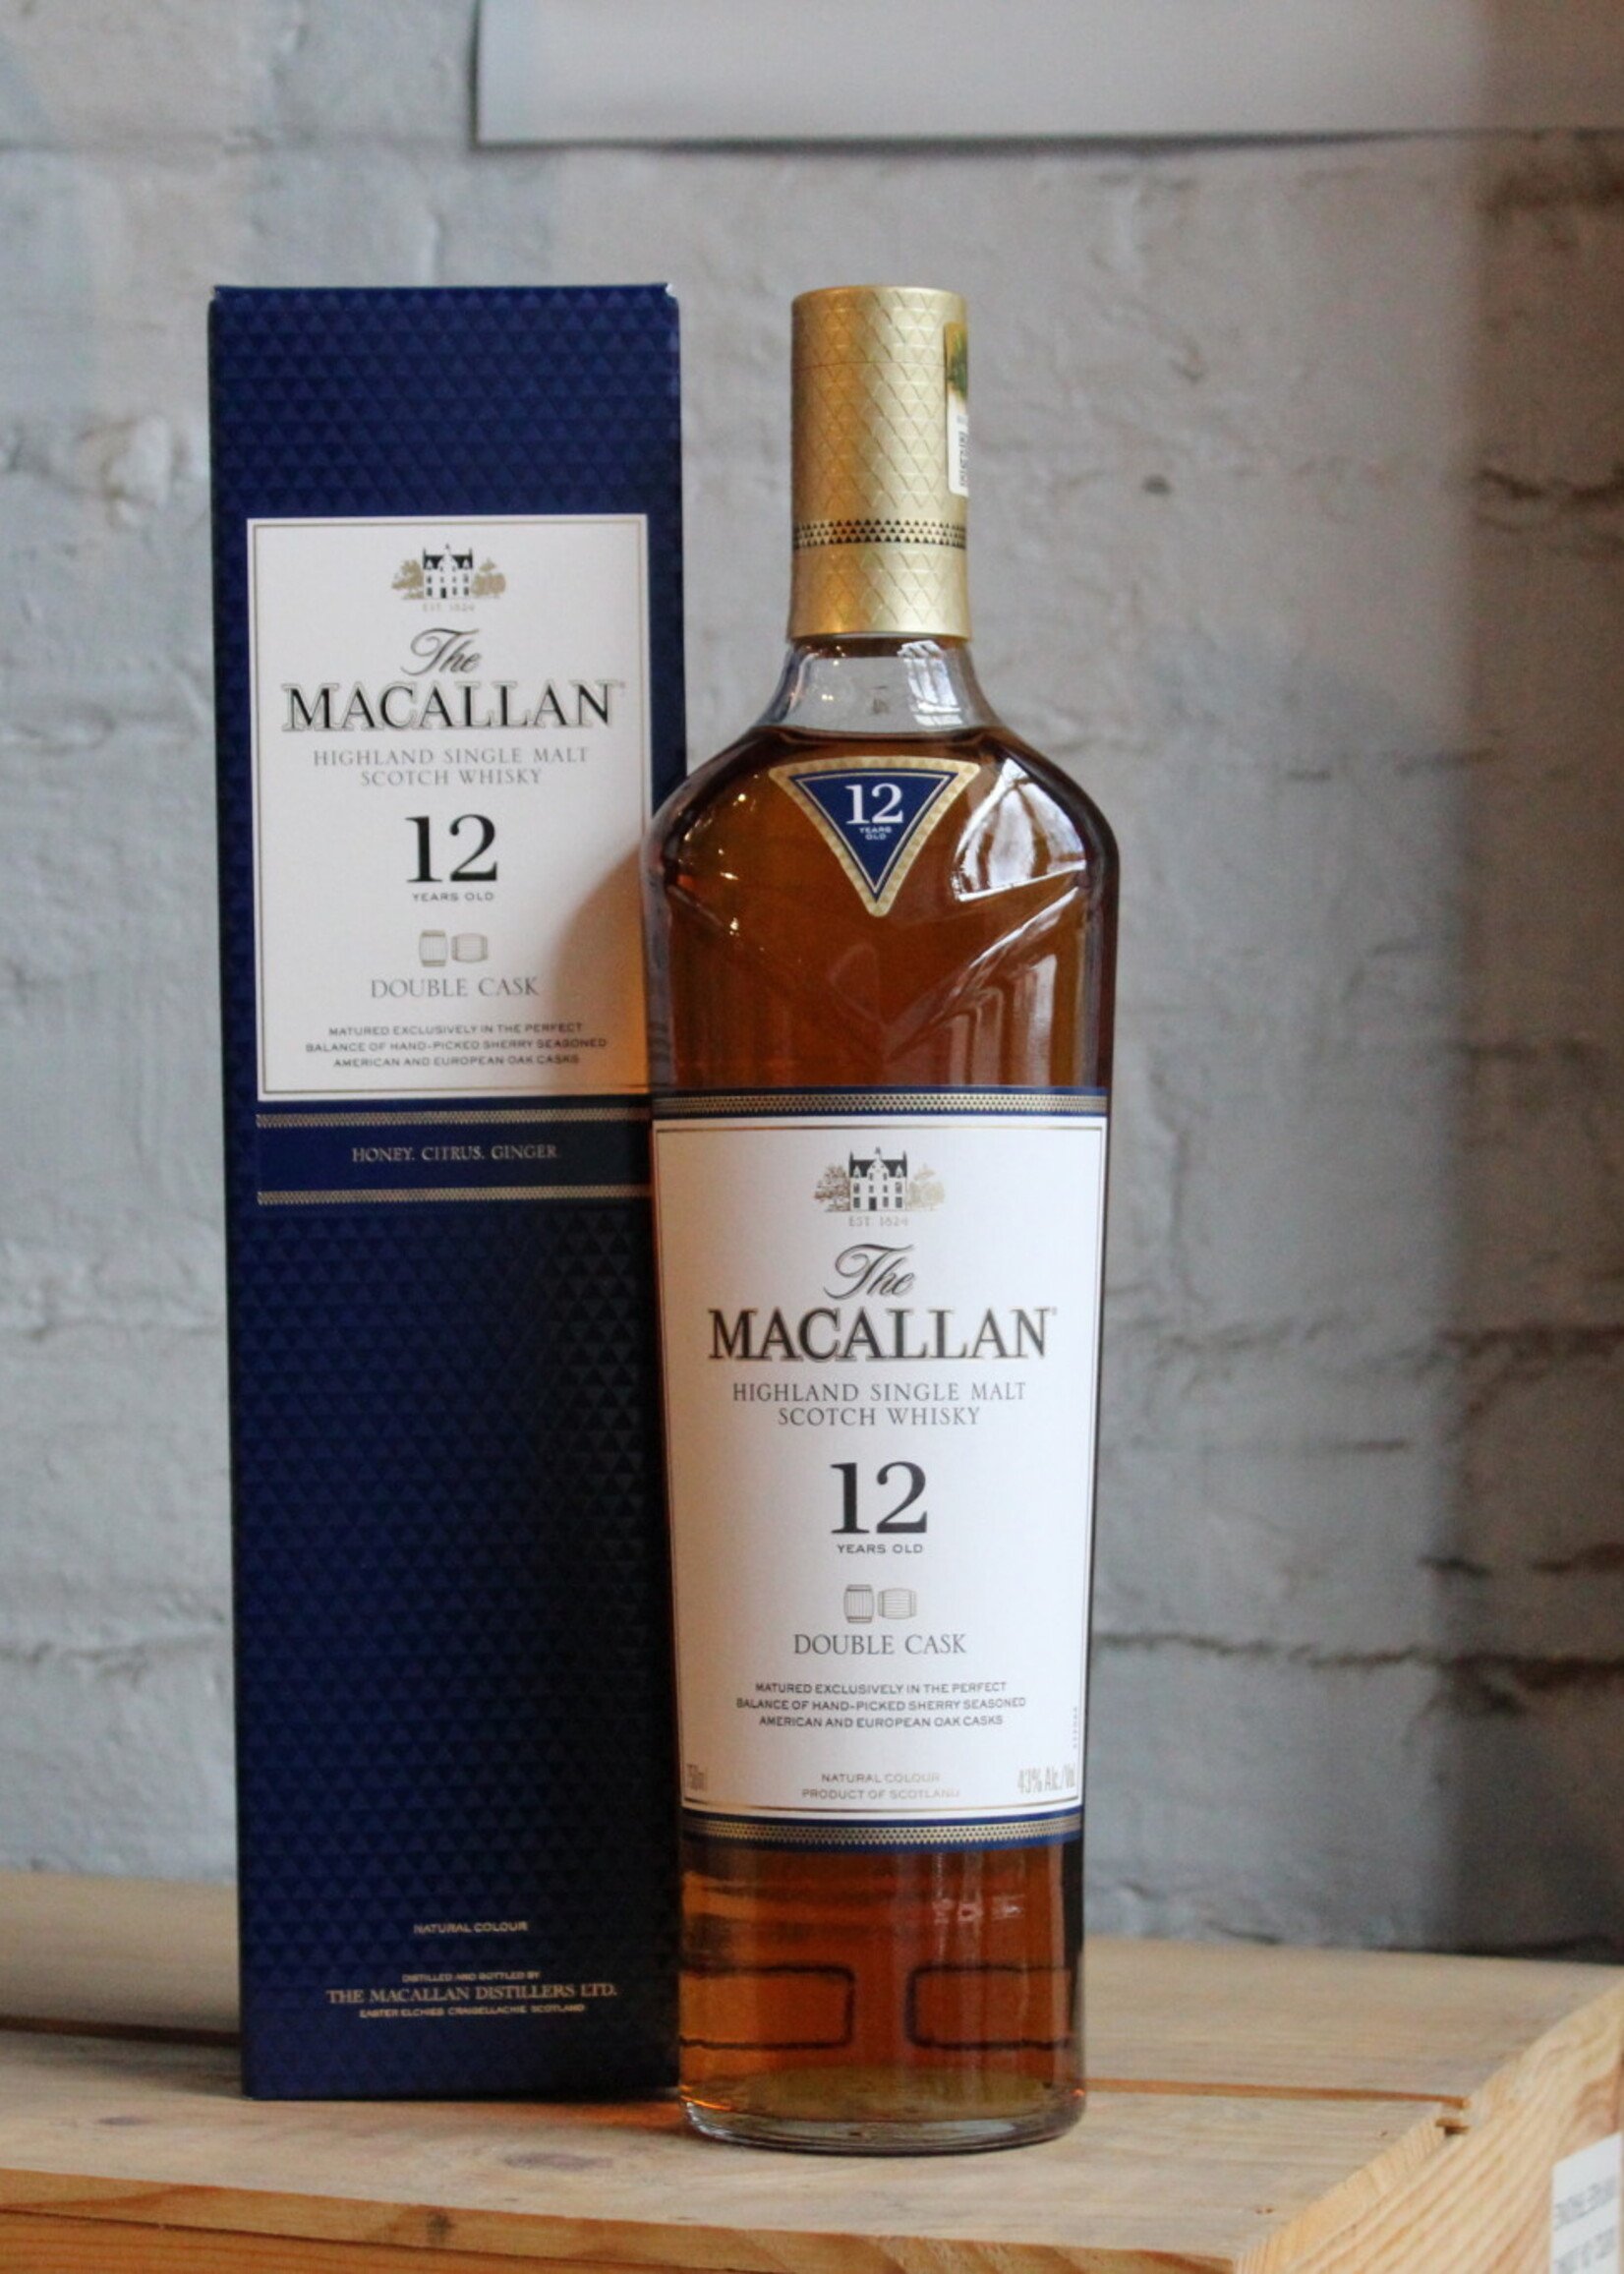 The Macallan 12yr Double Cask Single Malt Scotch Whisky - Speyside, Highland, Scotland (750ml)